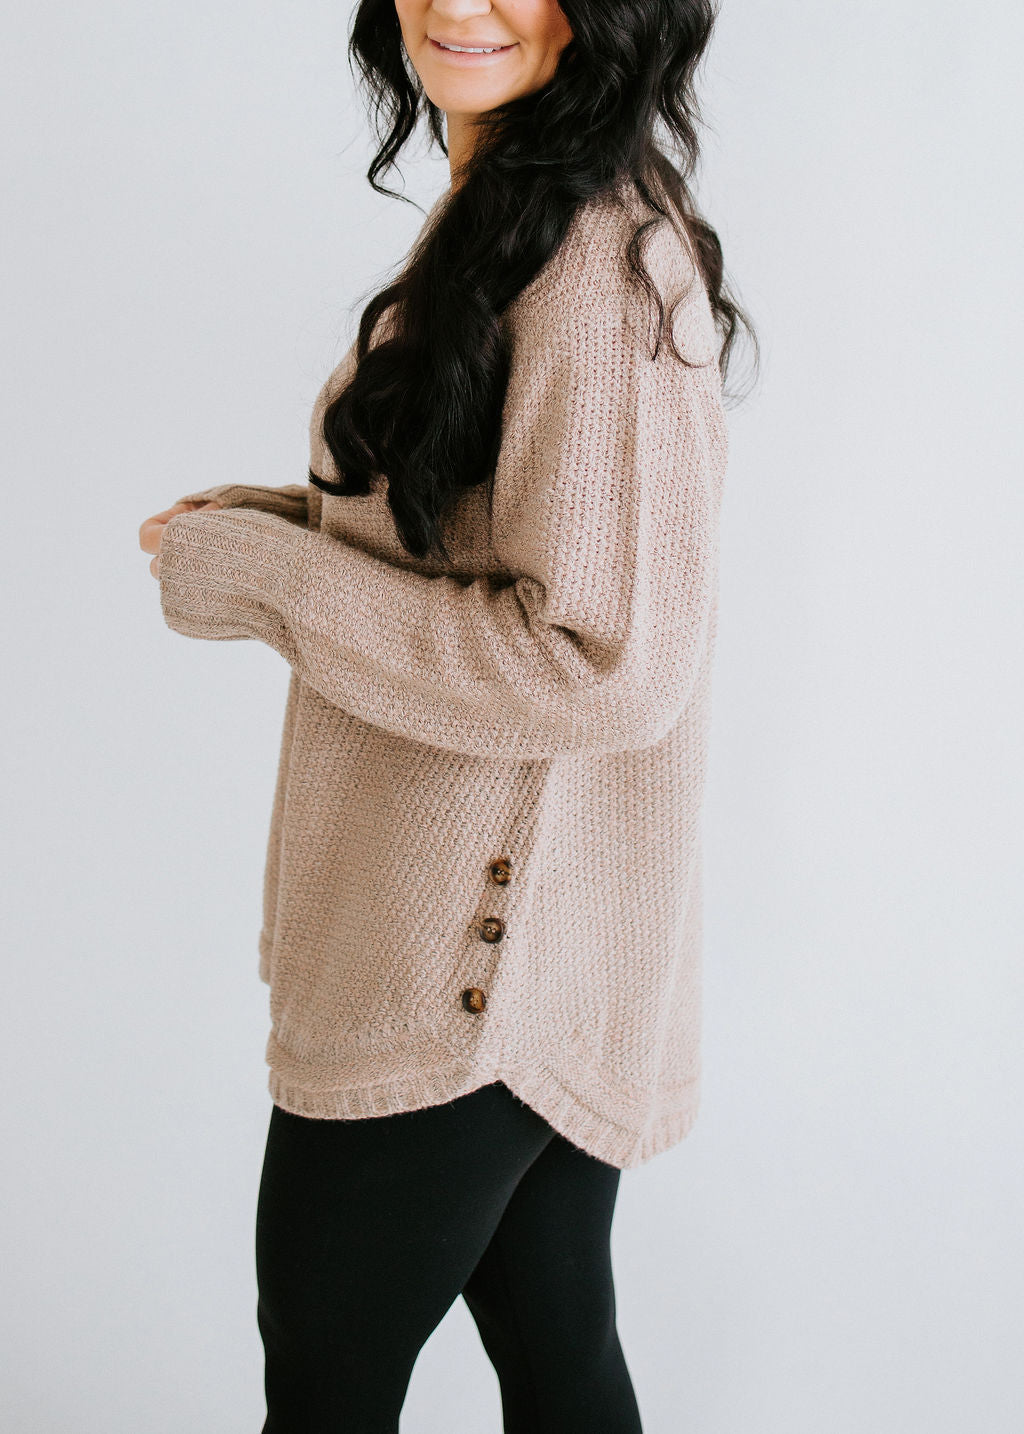 Iris Knit Sweater Pullover